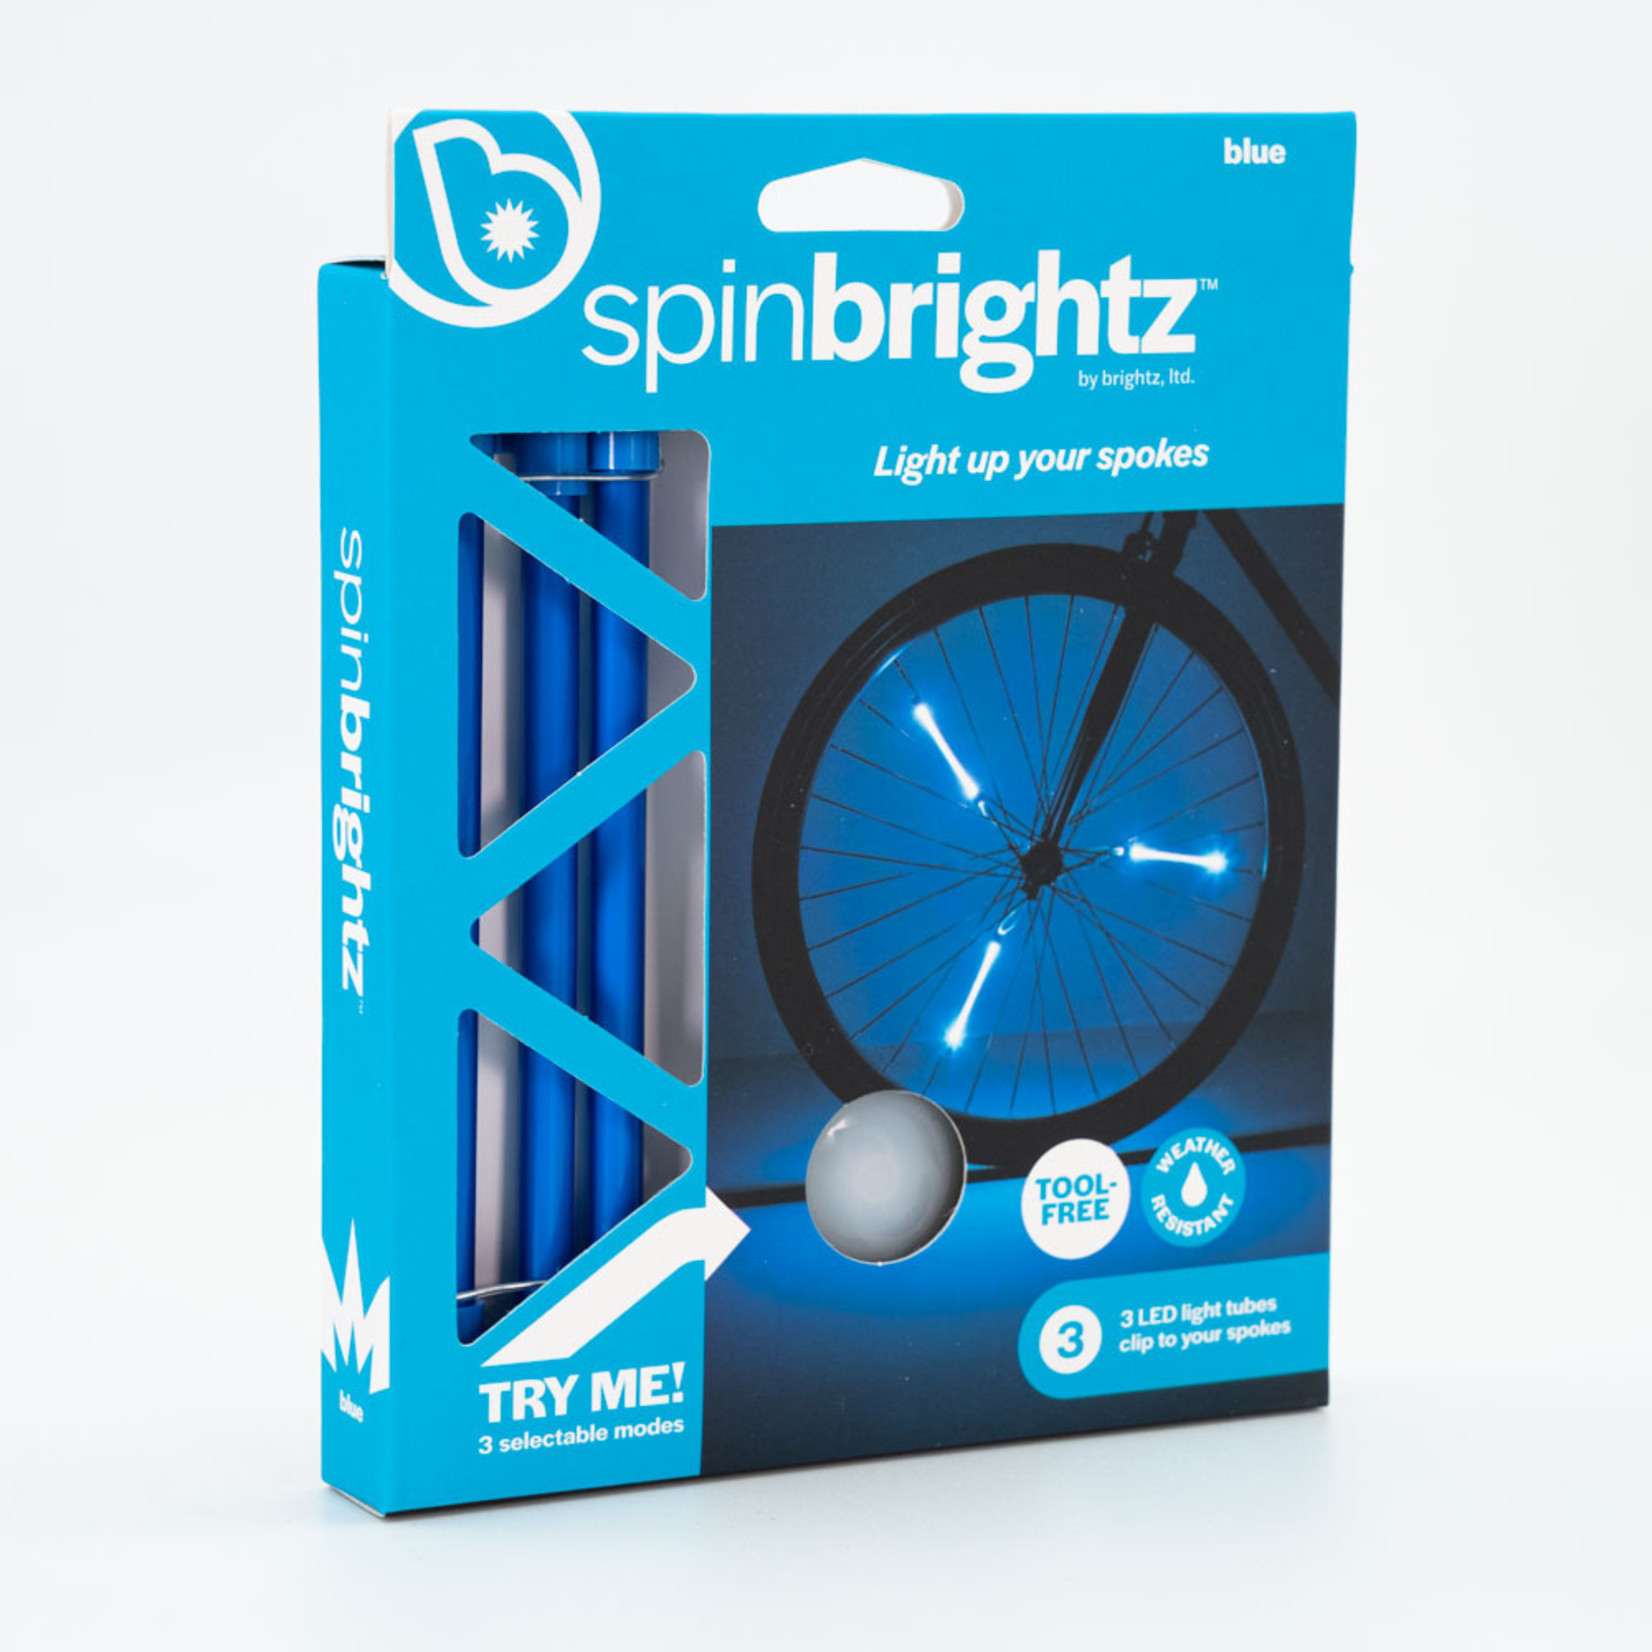 Spin Brightz in Blue